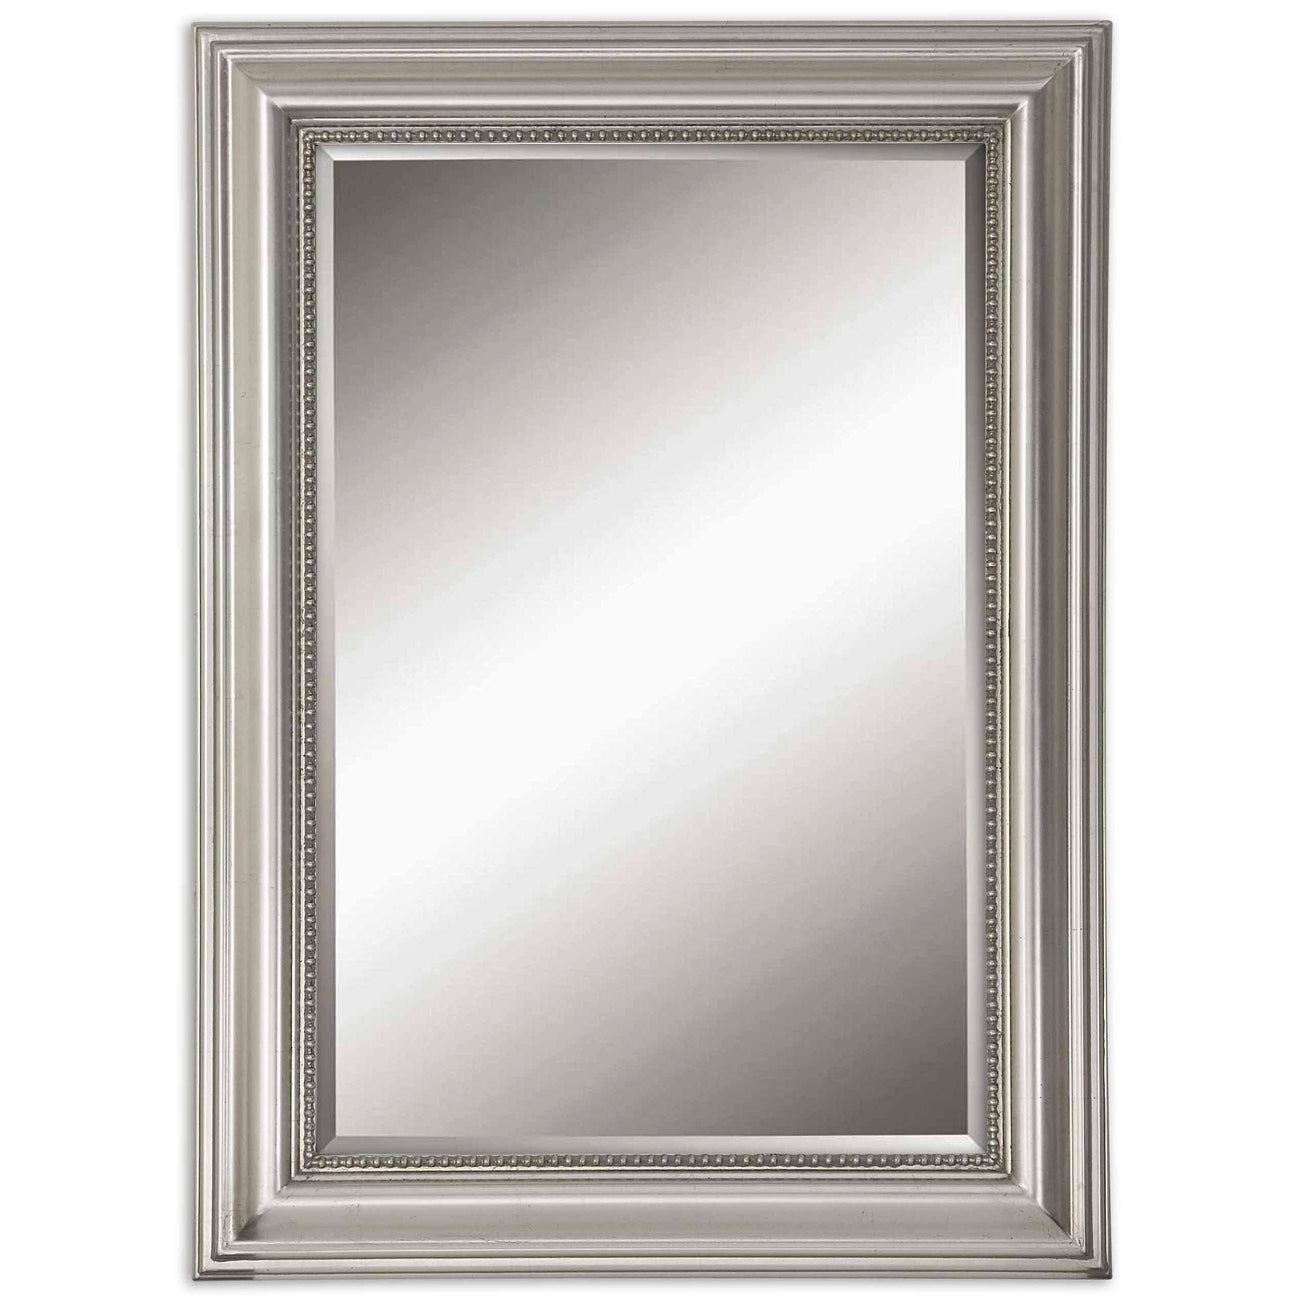 Stuart Silver Beaded Mirror-Uttermost-UTTM-12005 B-Mirrors-1-France and Son